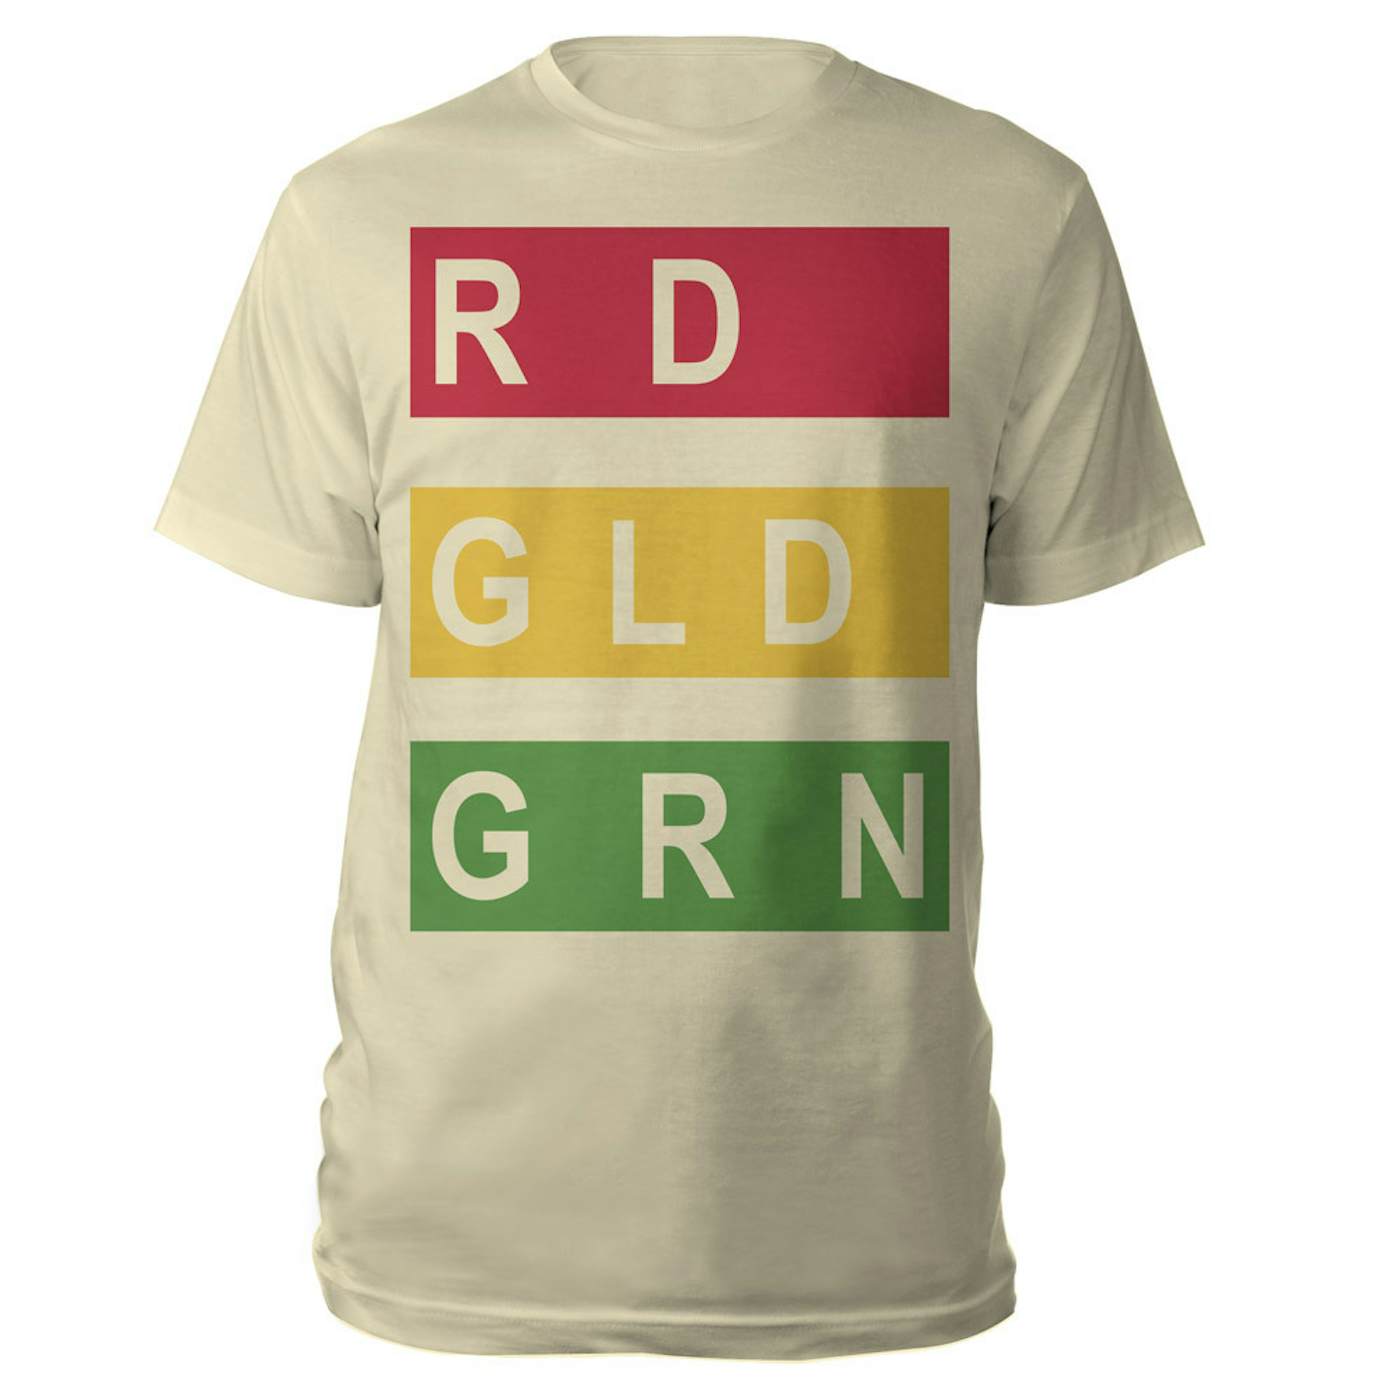 RDGLDGRN Cream Stacked Logo Tee